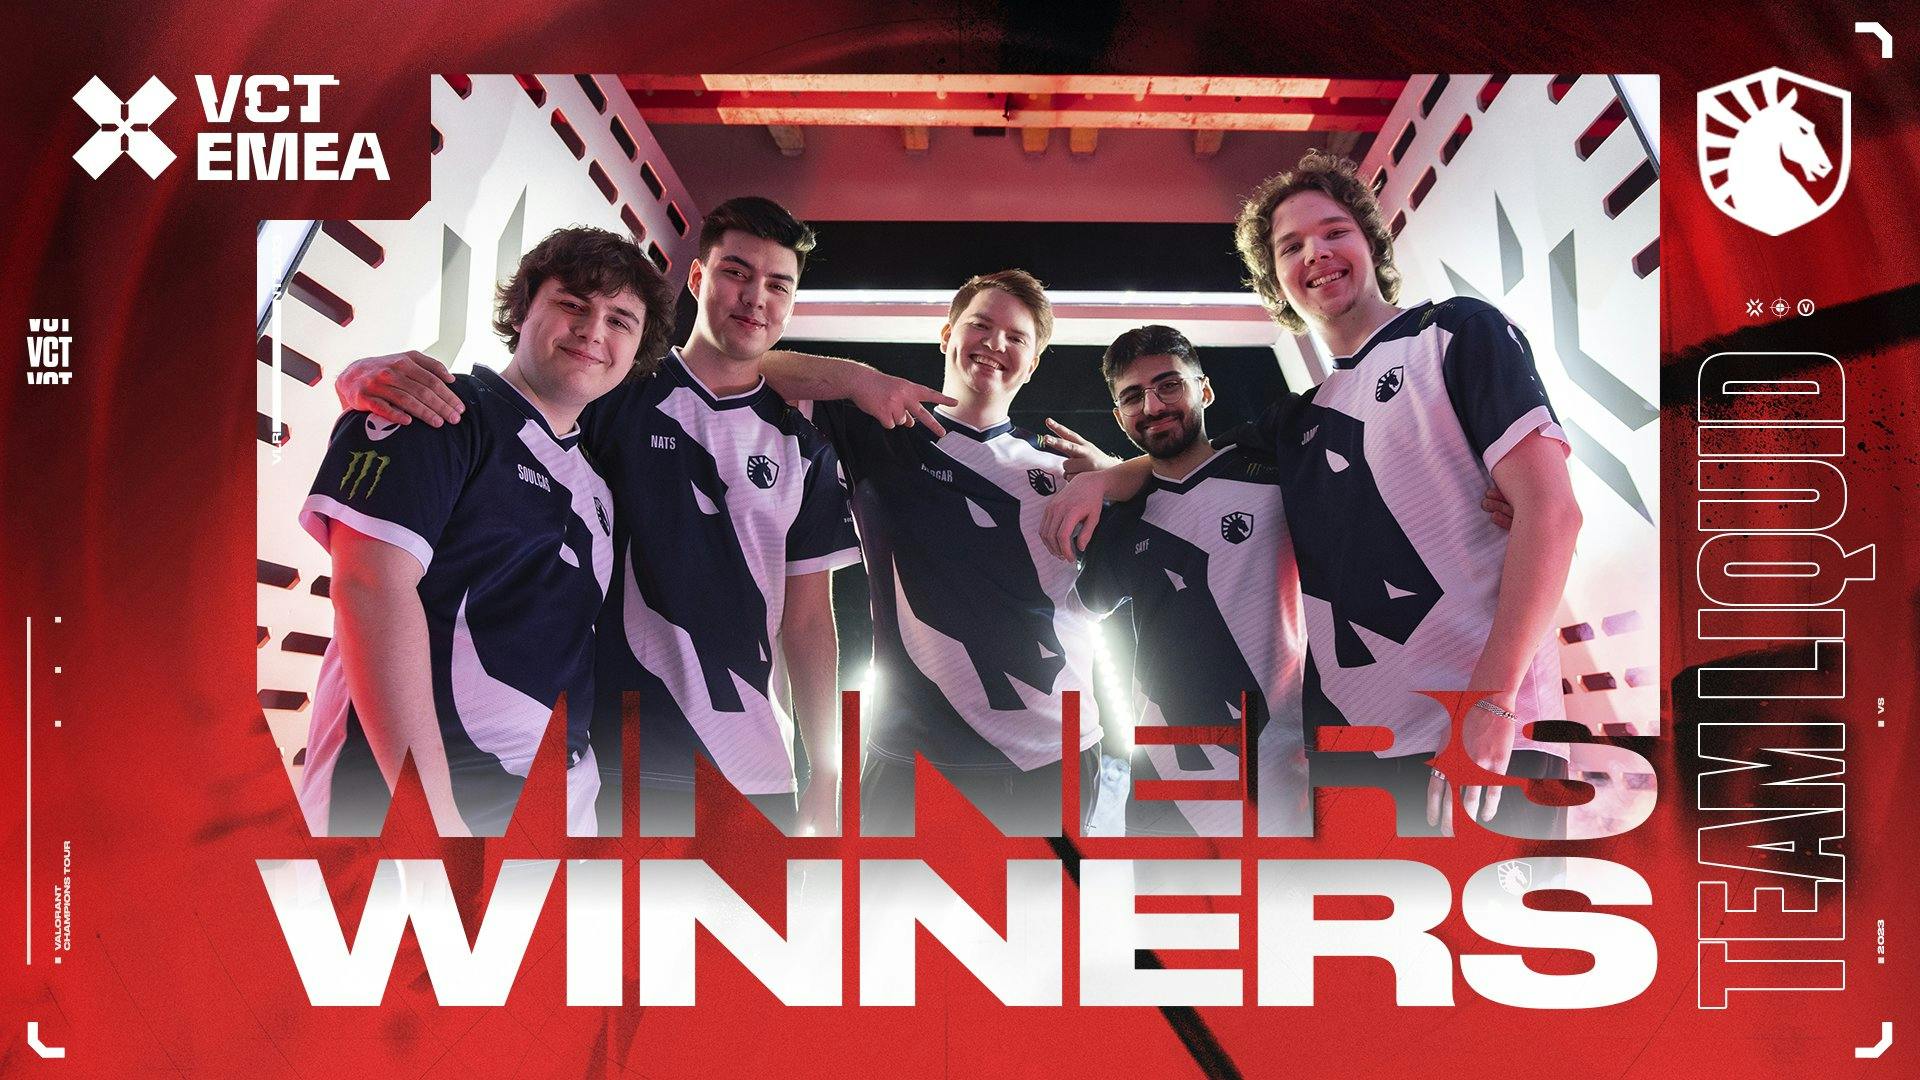 「VCT EMEA」Team LiquidがFnaticに3-1で勝利し優勝。Fnaticの連勝記録は20でストップ